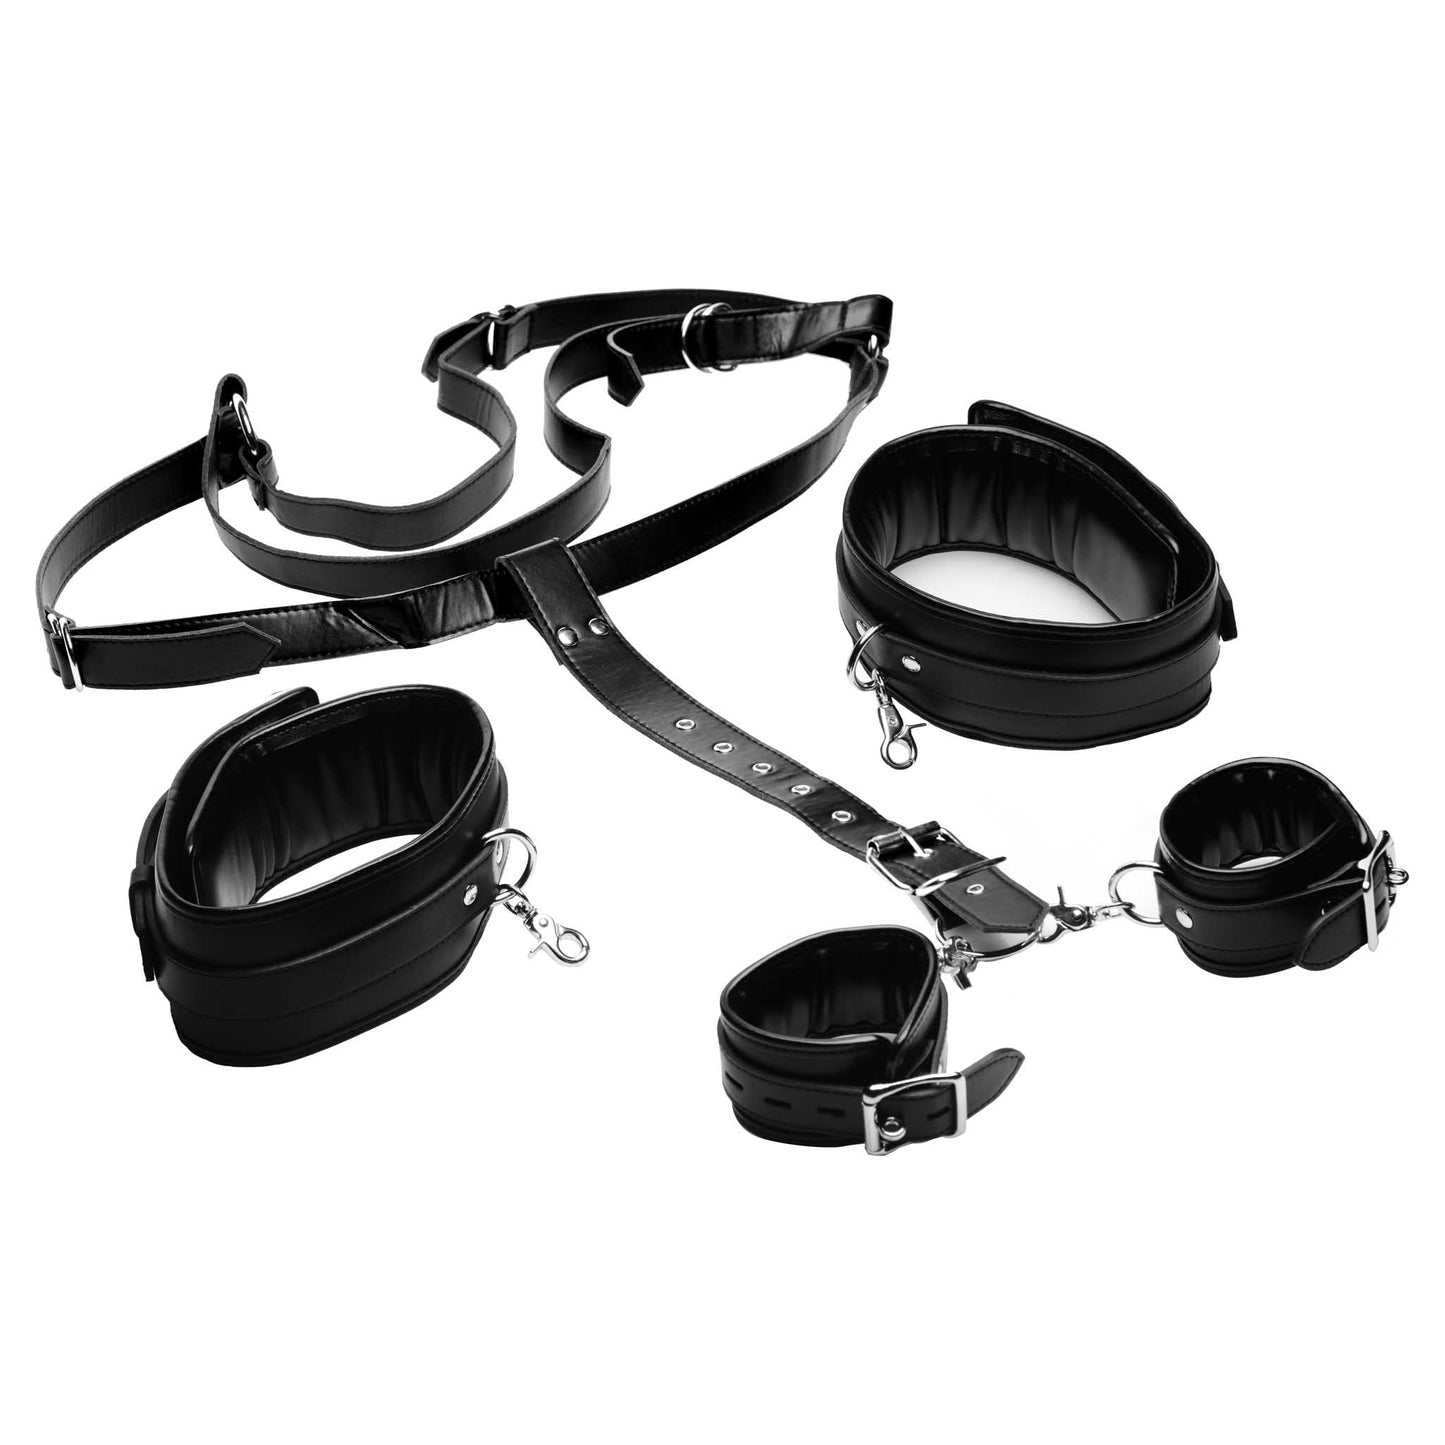 Strict Thigh Sling with Wrist Cuffs - Black